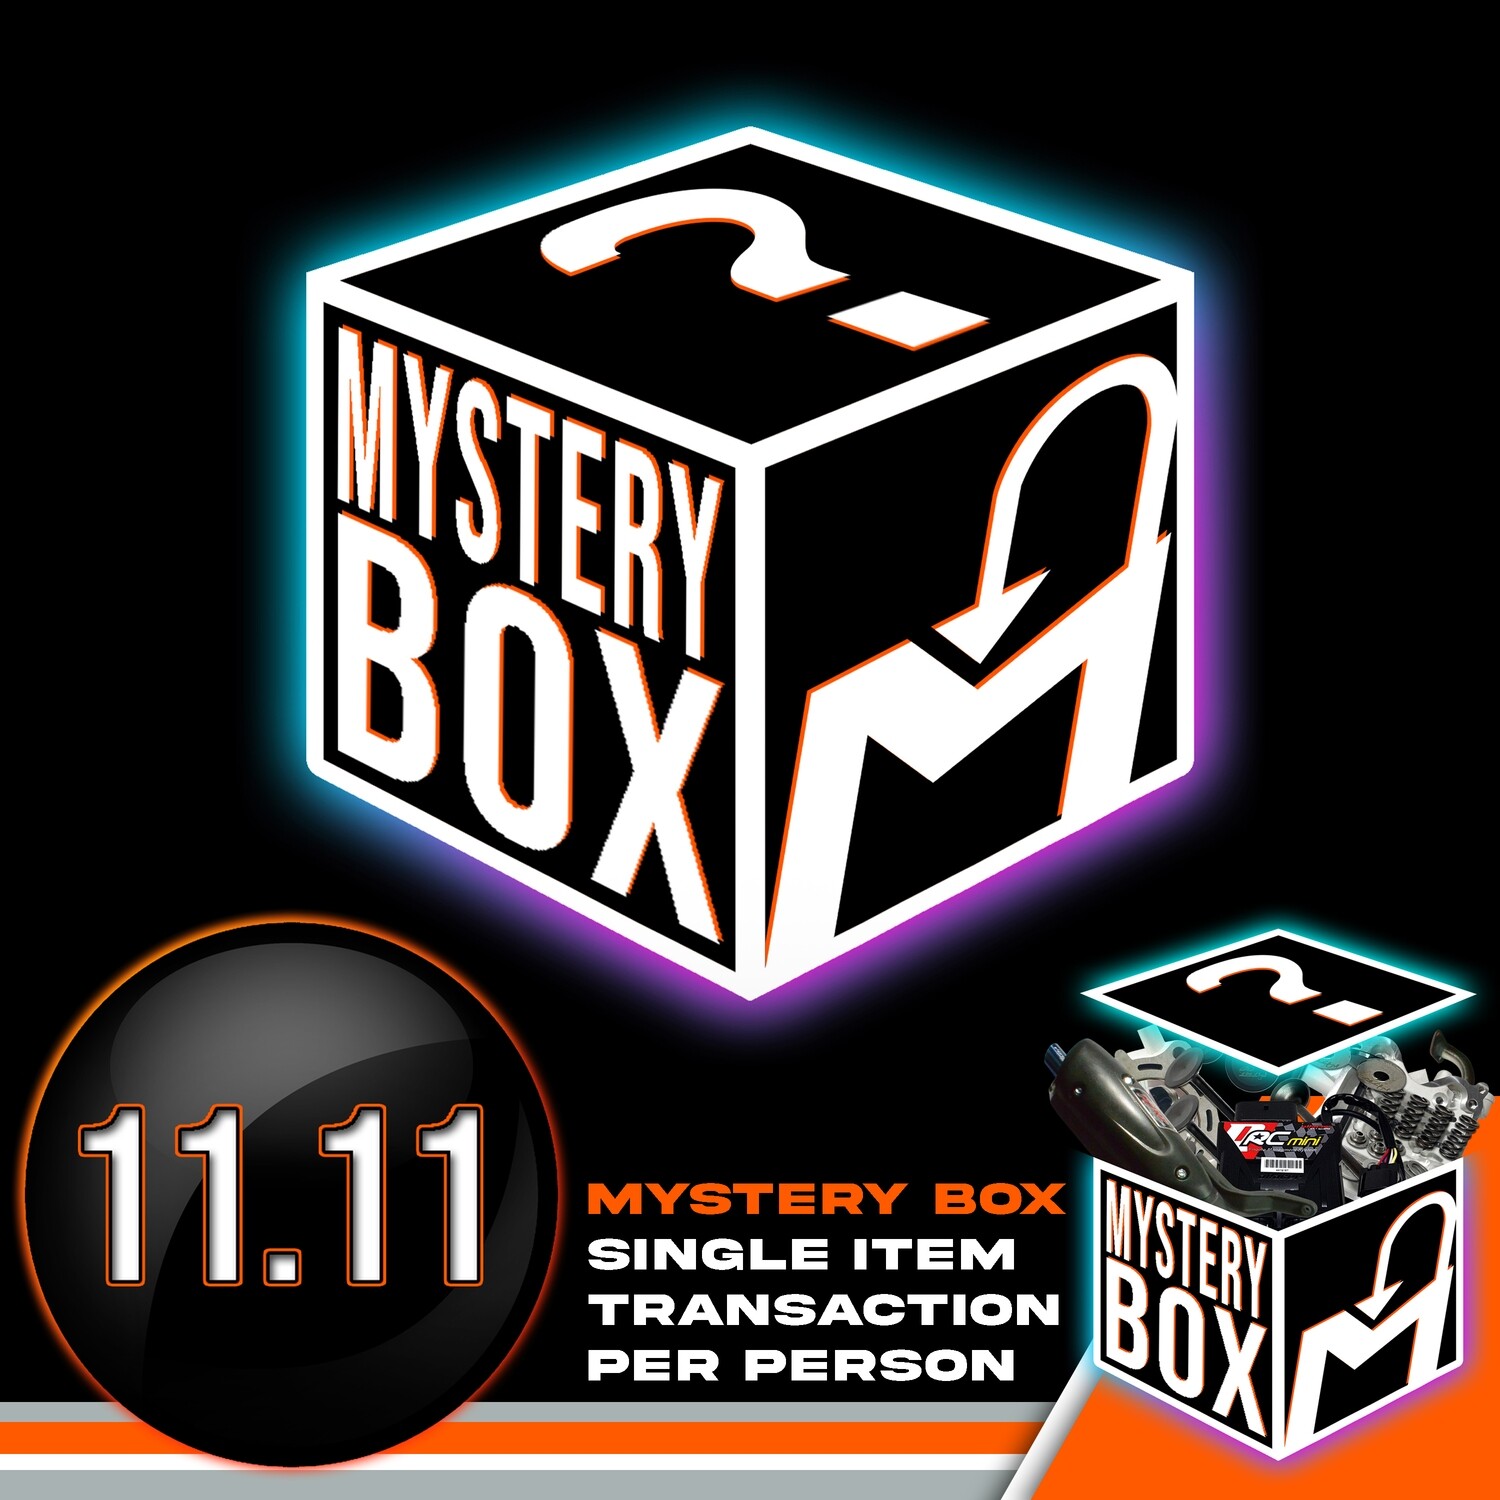 MYSTERY BOX #110 (11.11 PROMO)